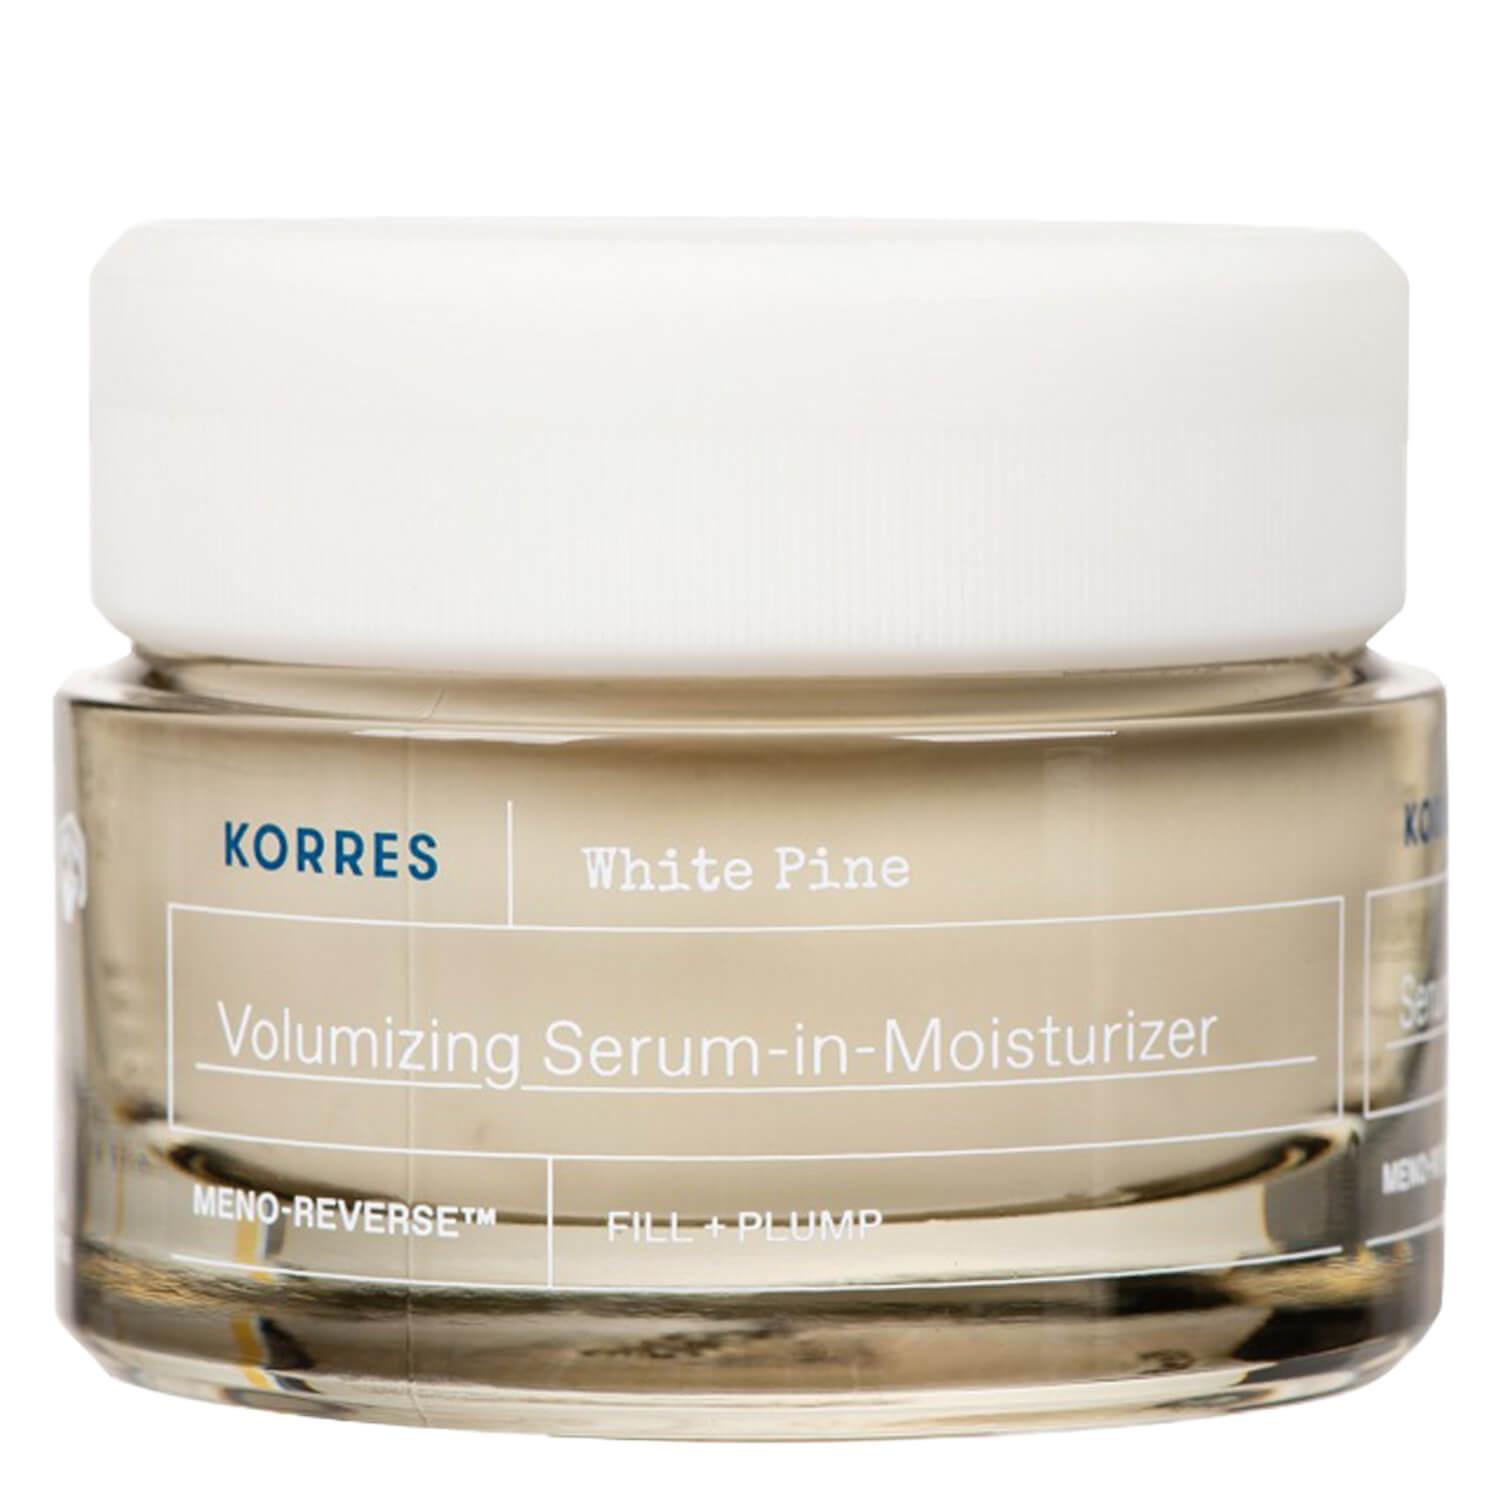 Korres Care - White Pine Meno Reverse Volumizing Serum-in-Moisturizer